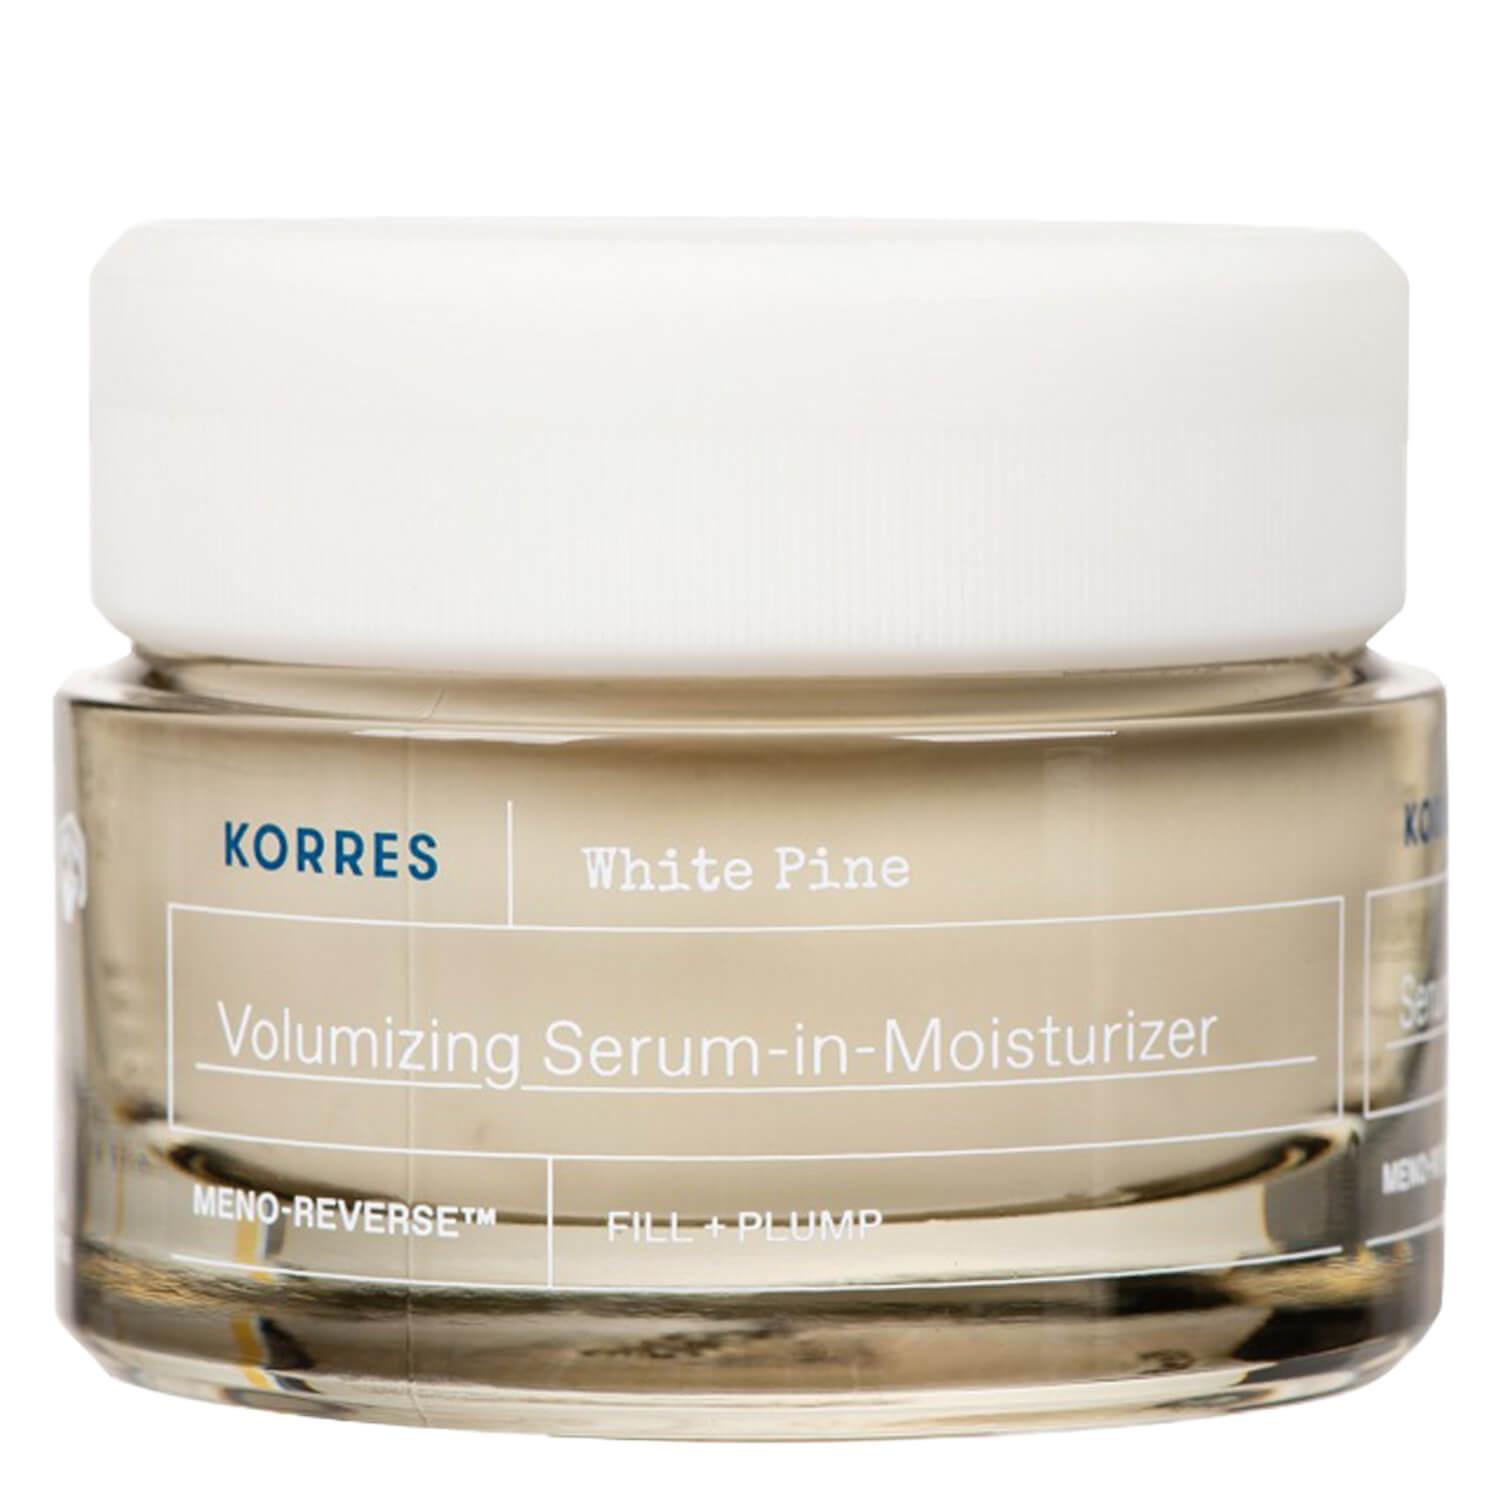 Korres Care - White Pine Meno Reverse Volumizing Serum-in-Moisturizer